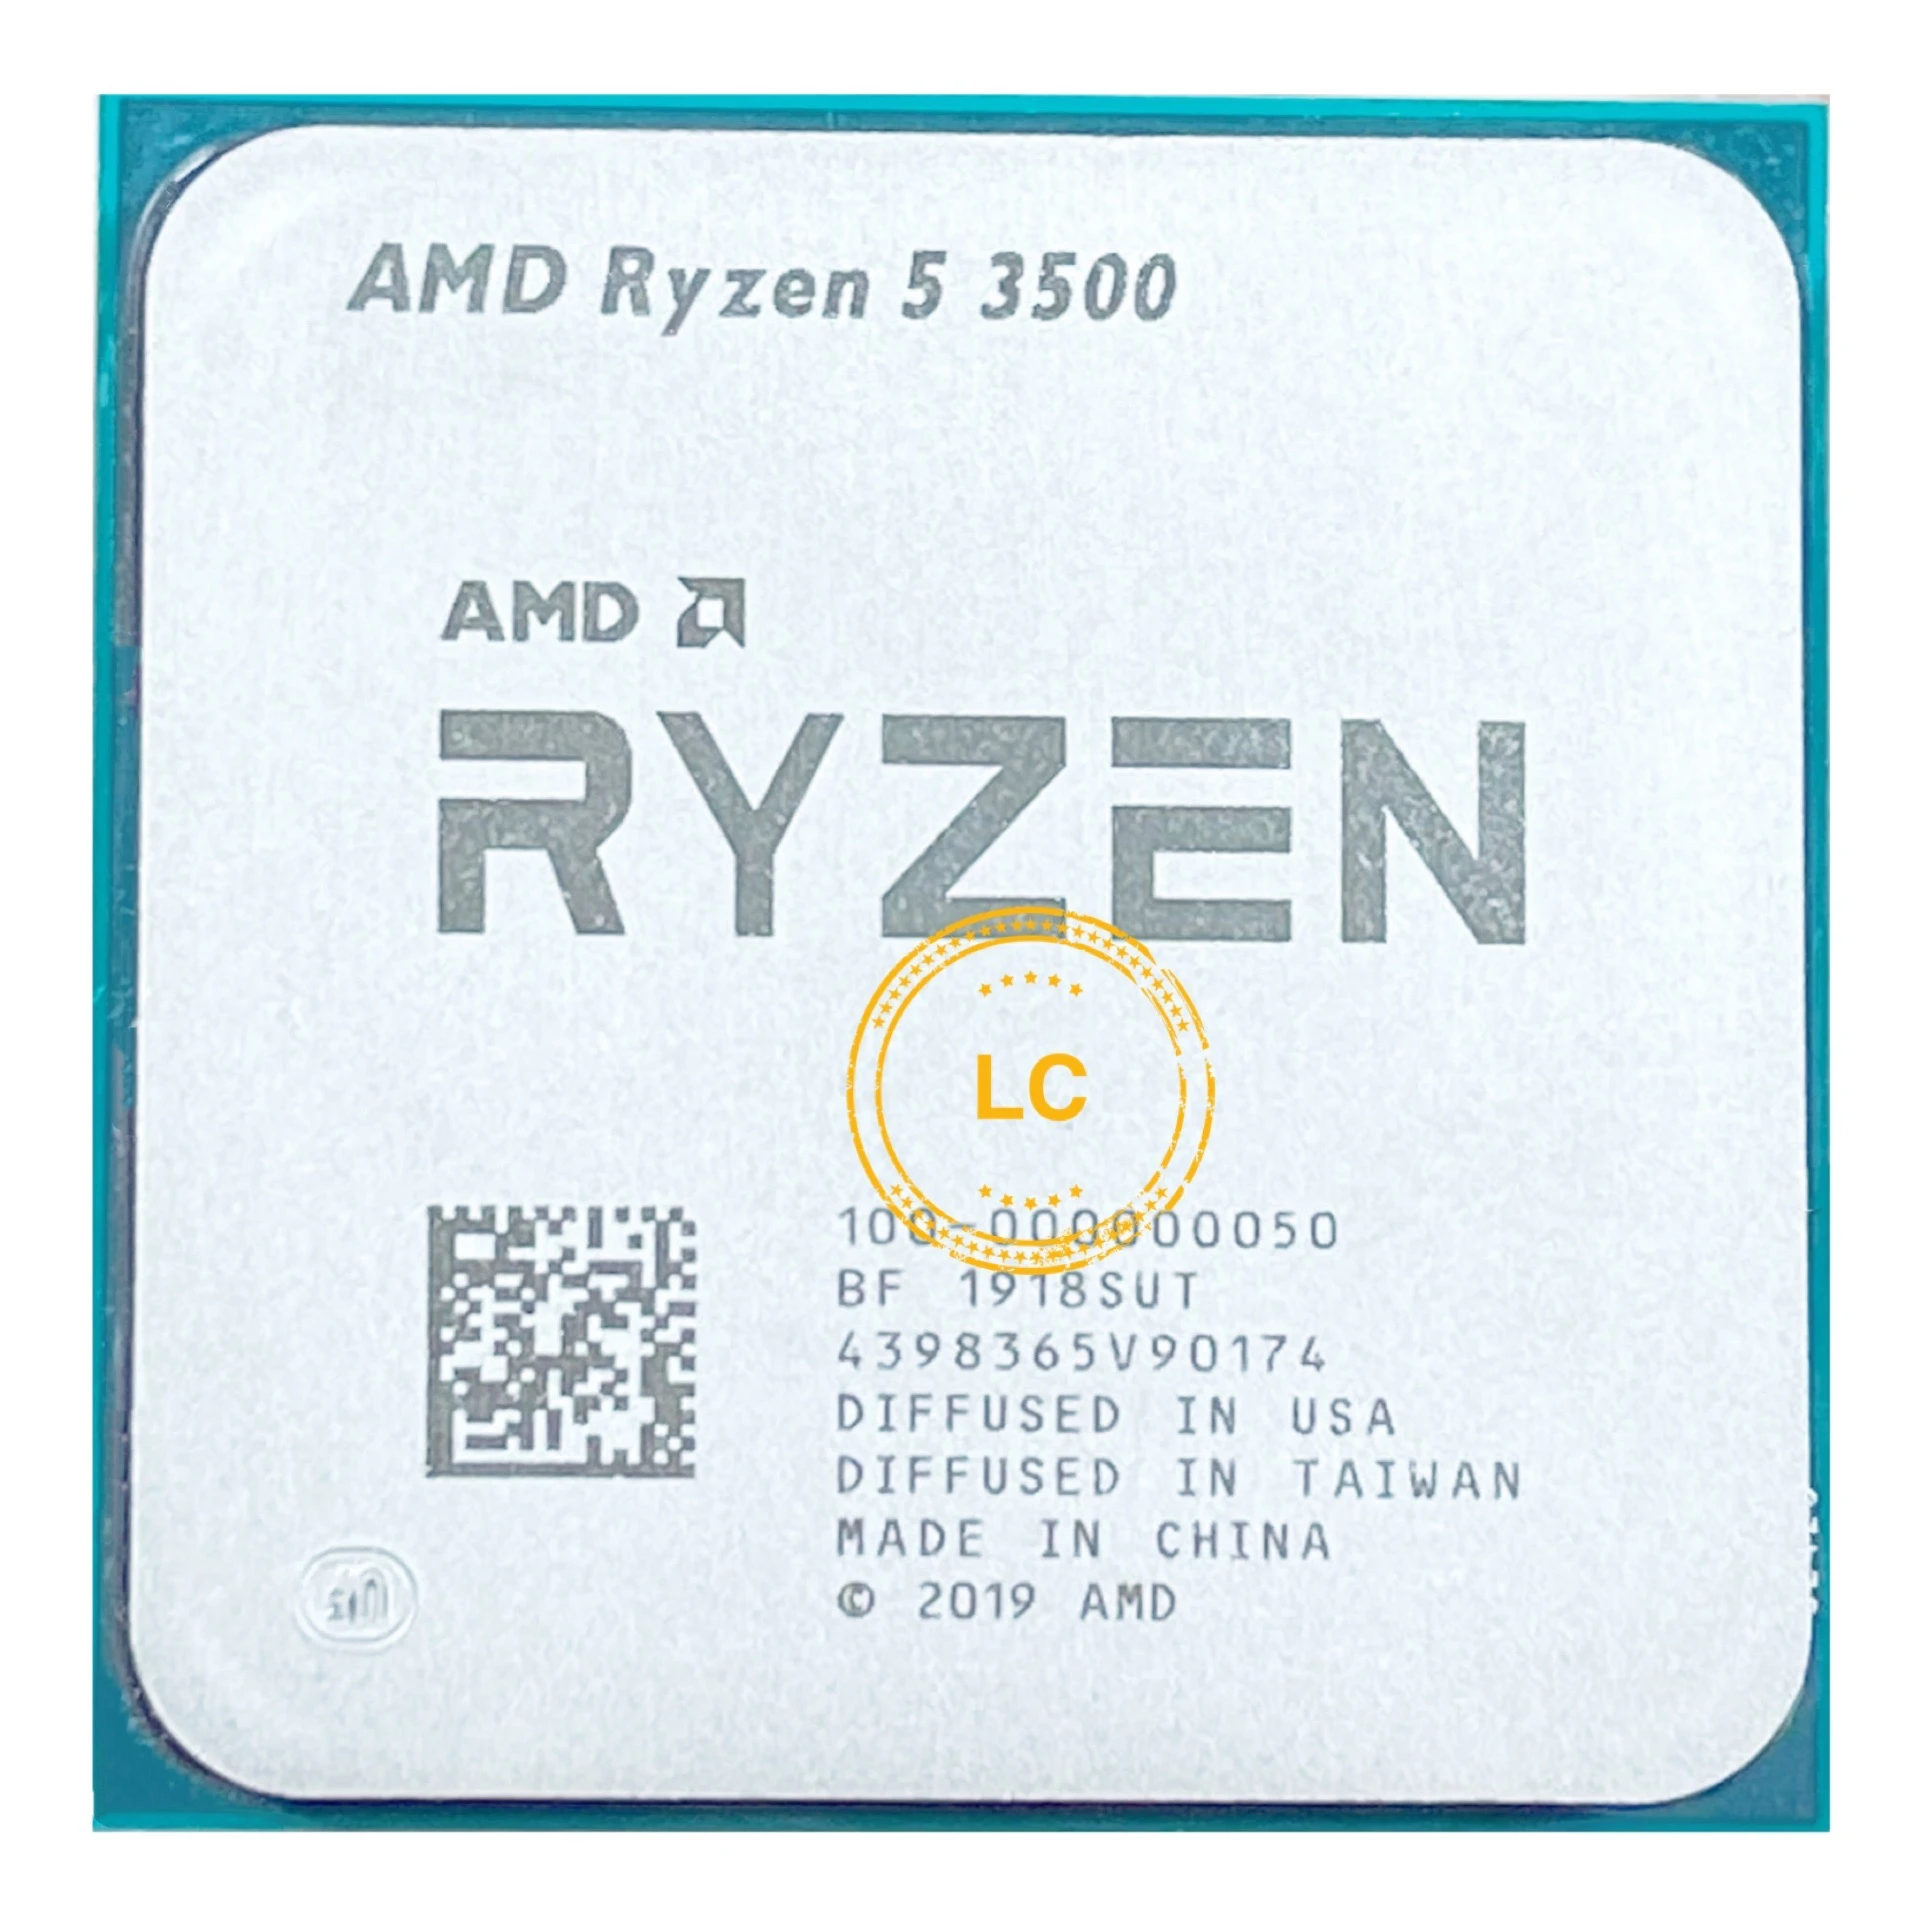 AMD Ryzen 5 3500 R5 3500 3.6 GHz Six-Core Six-Thread CPU Processor 65W  L3=16M 100-000000050 Socket AM4 same use as R5 3500X